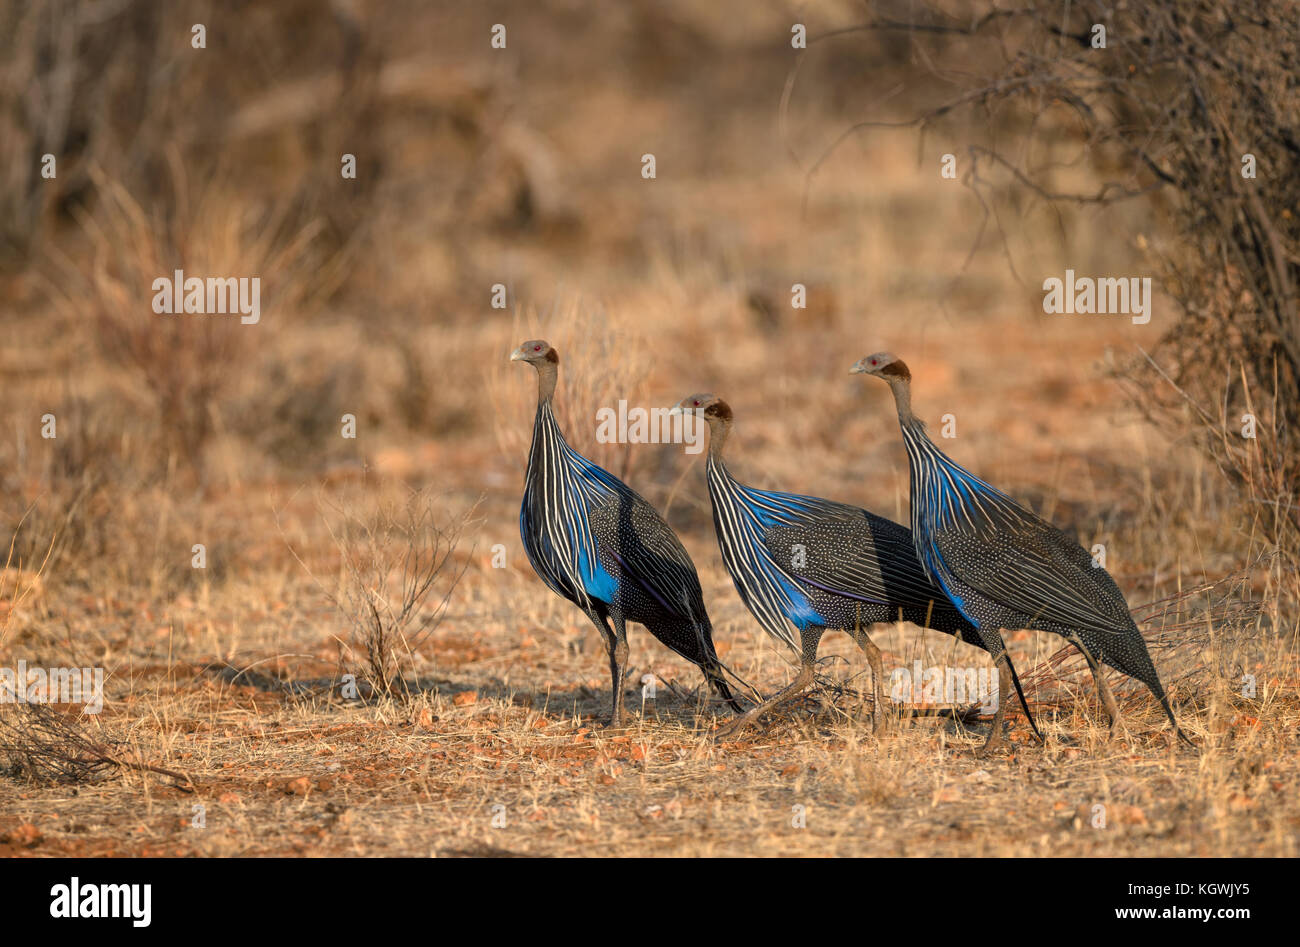 Three Vulturine Guineafowl Standing in Landscape Stock Photo